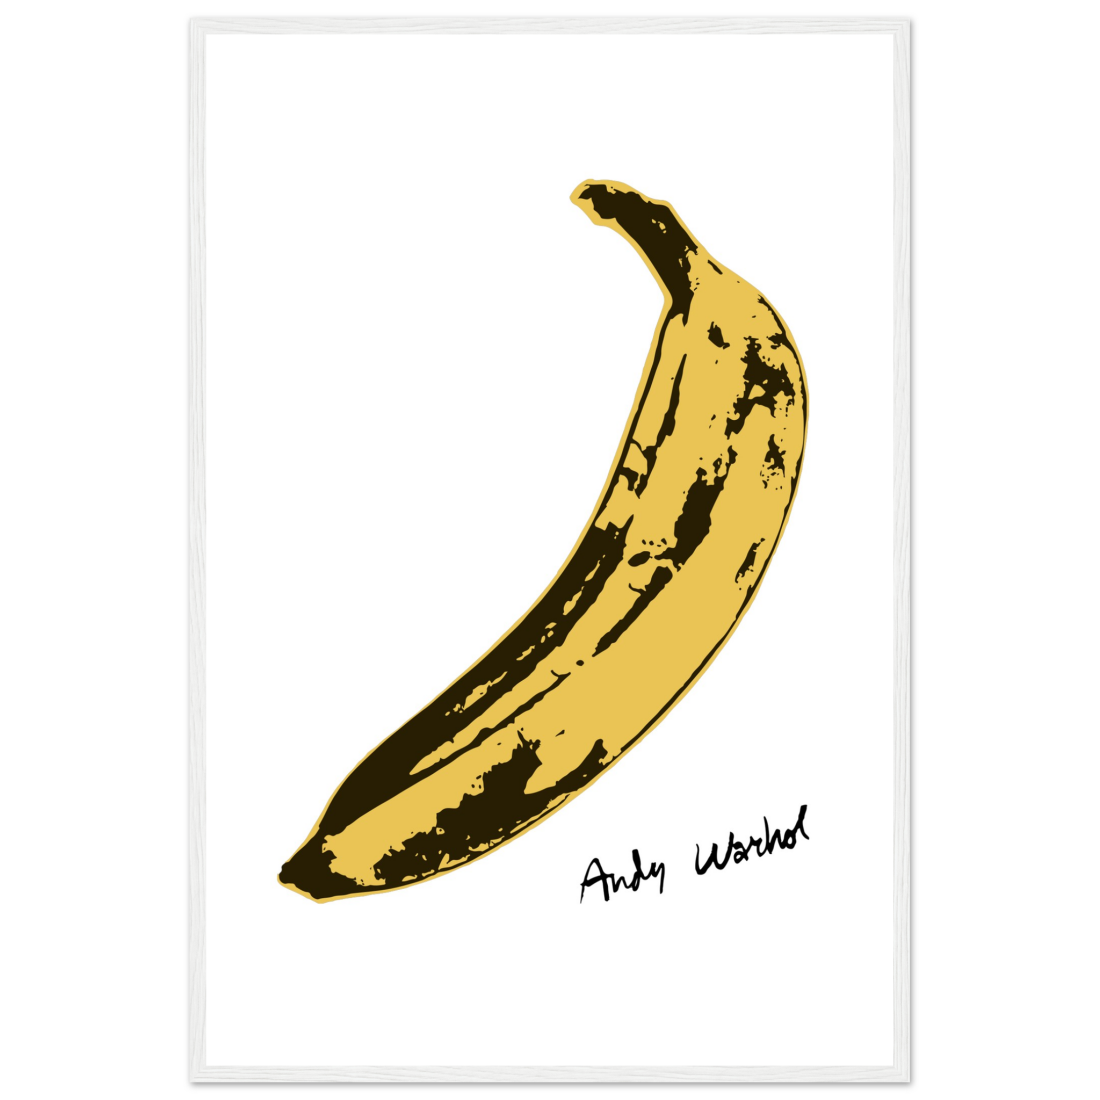 Andy Warhol's Banana, 1967 Pop Art Poster-16